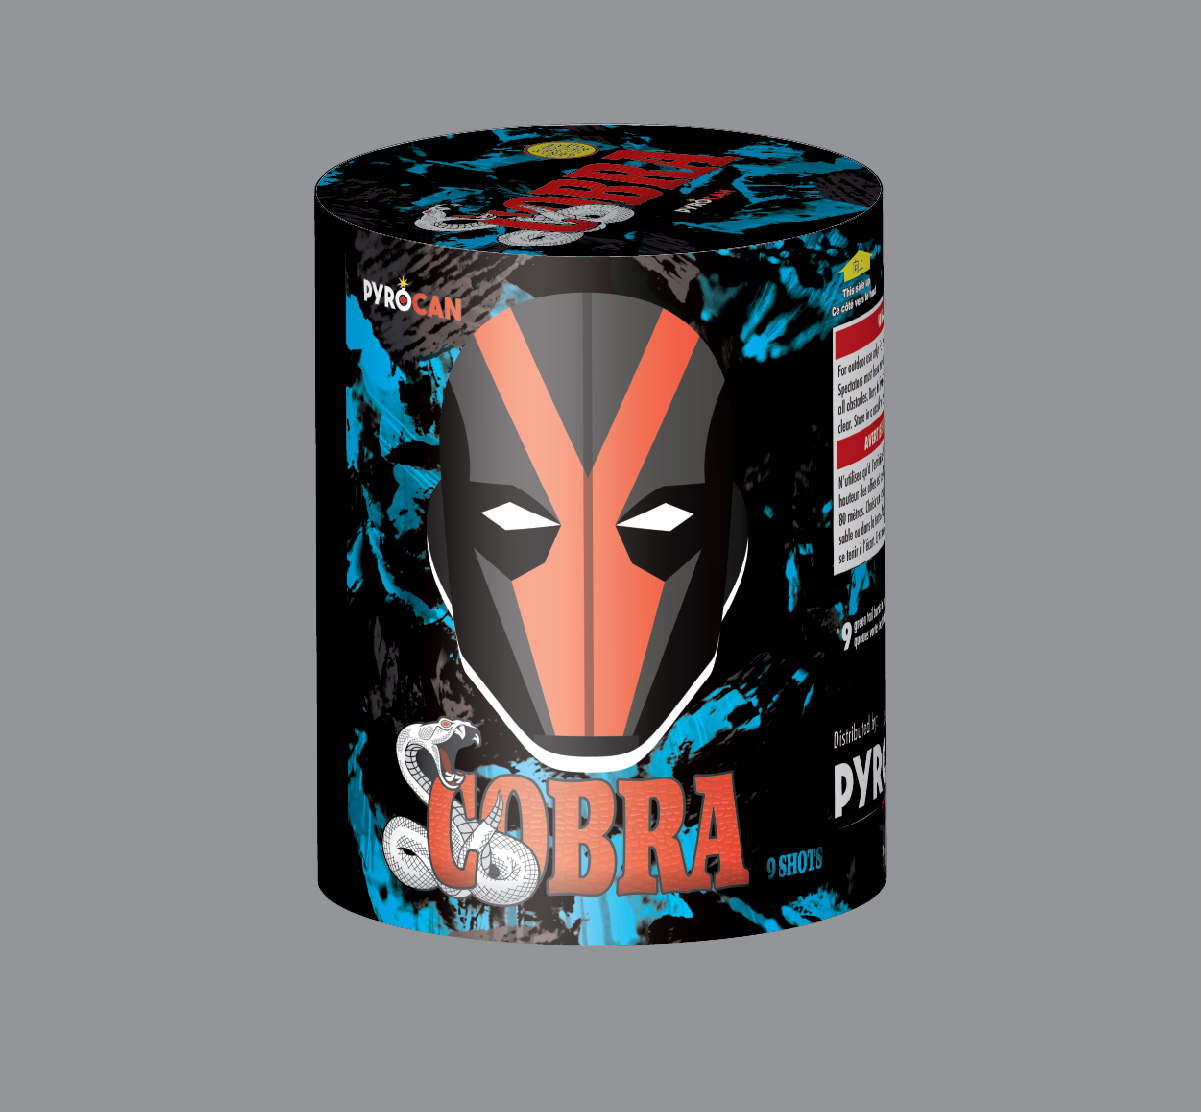 cobra (New Pyro can)